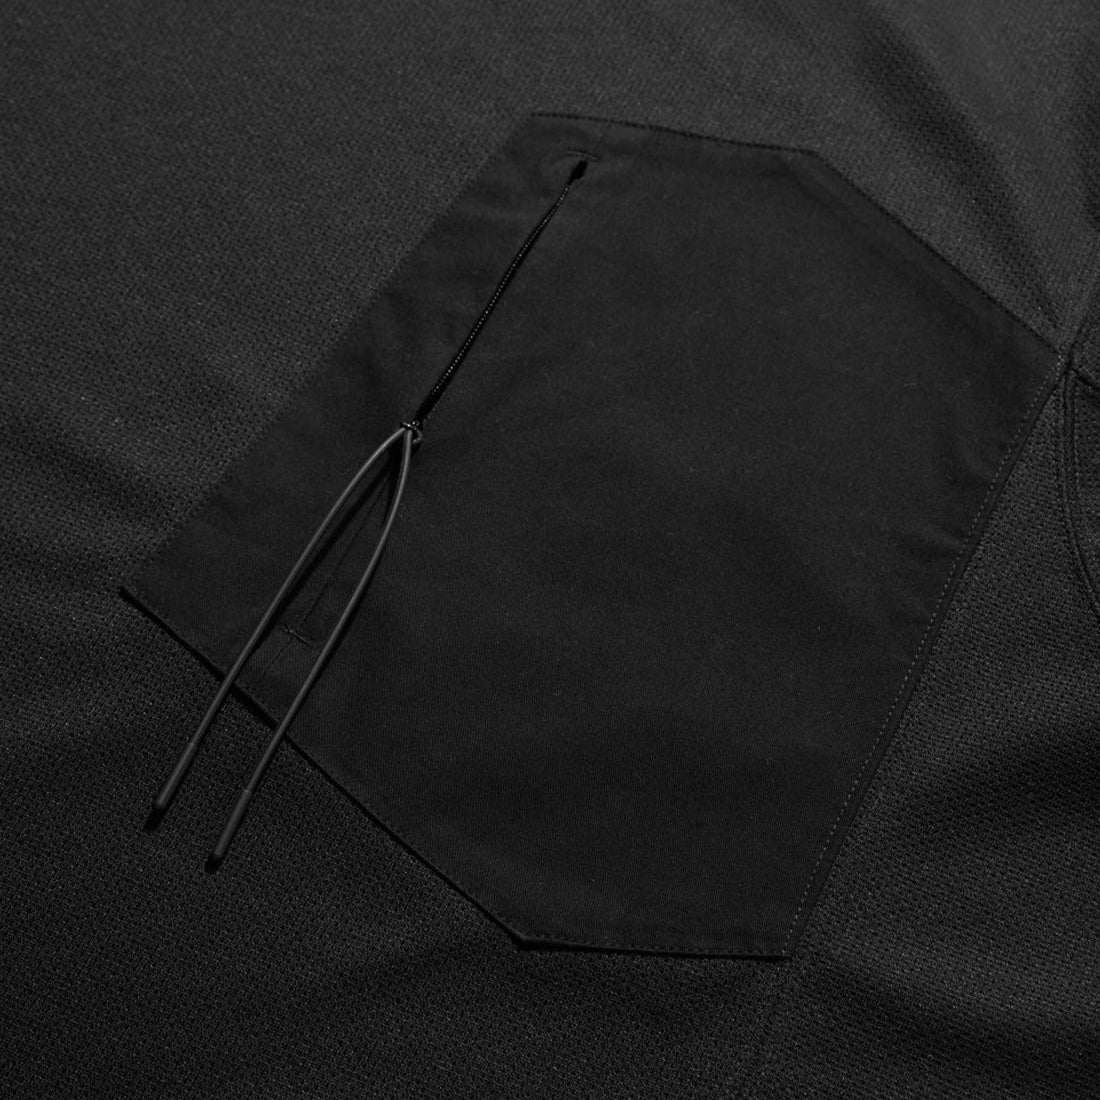 Maharishi Men Polartec Dry Travel T-Shirt logo-patch Black - T-SHIRTS - Canada